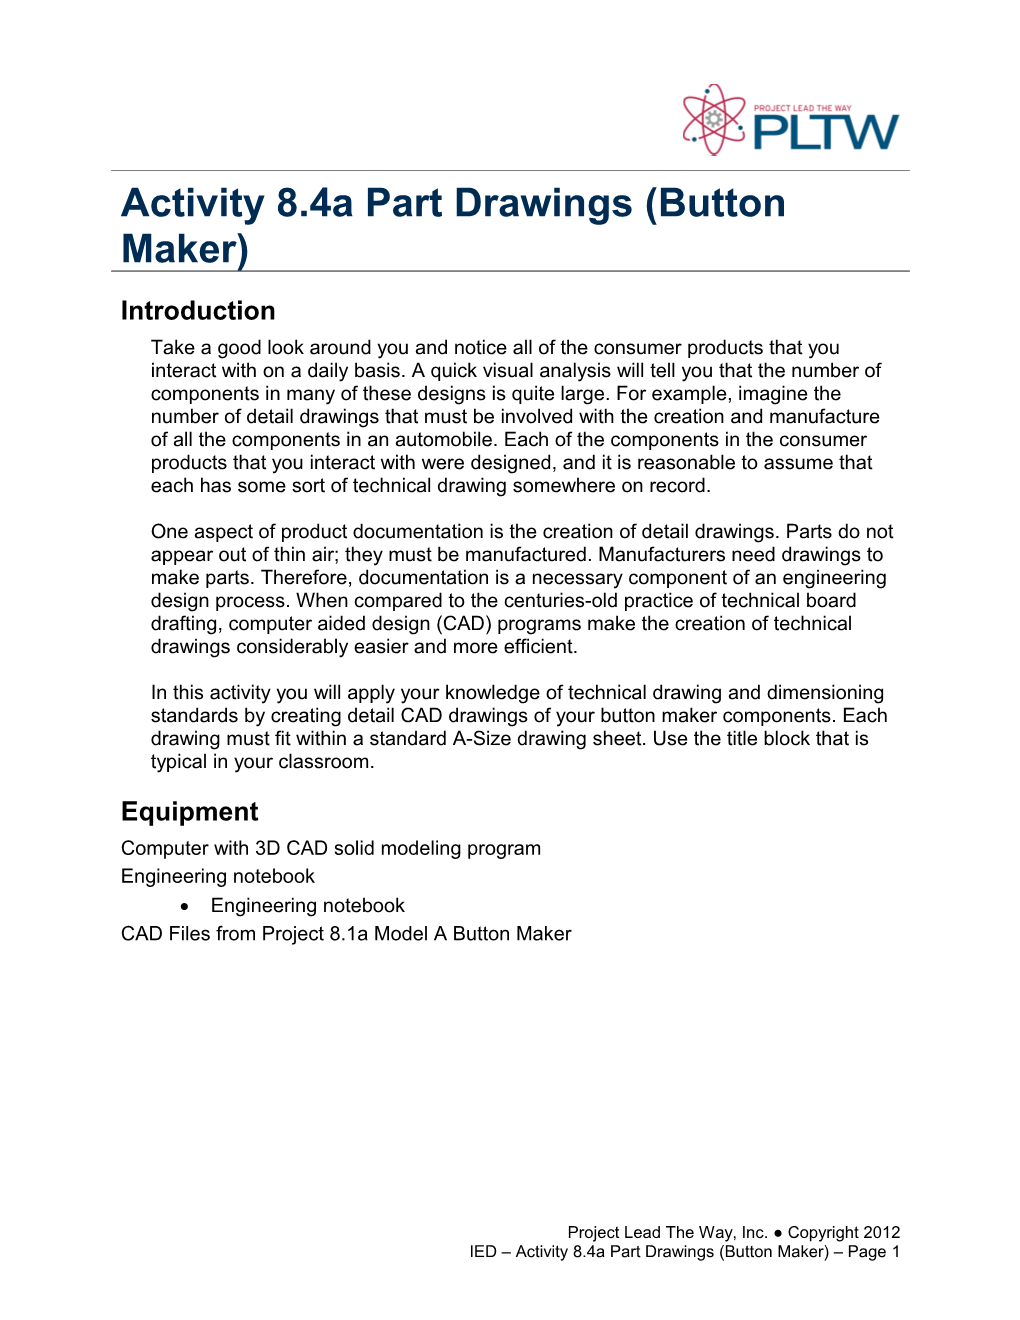 Activity 8.4A Part Drawings (Button Maker)